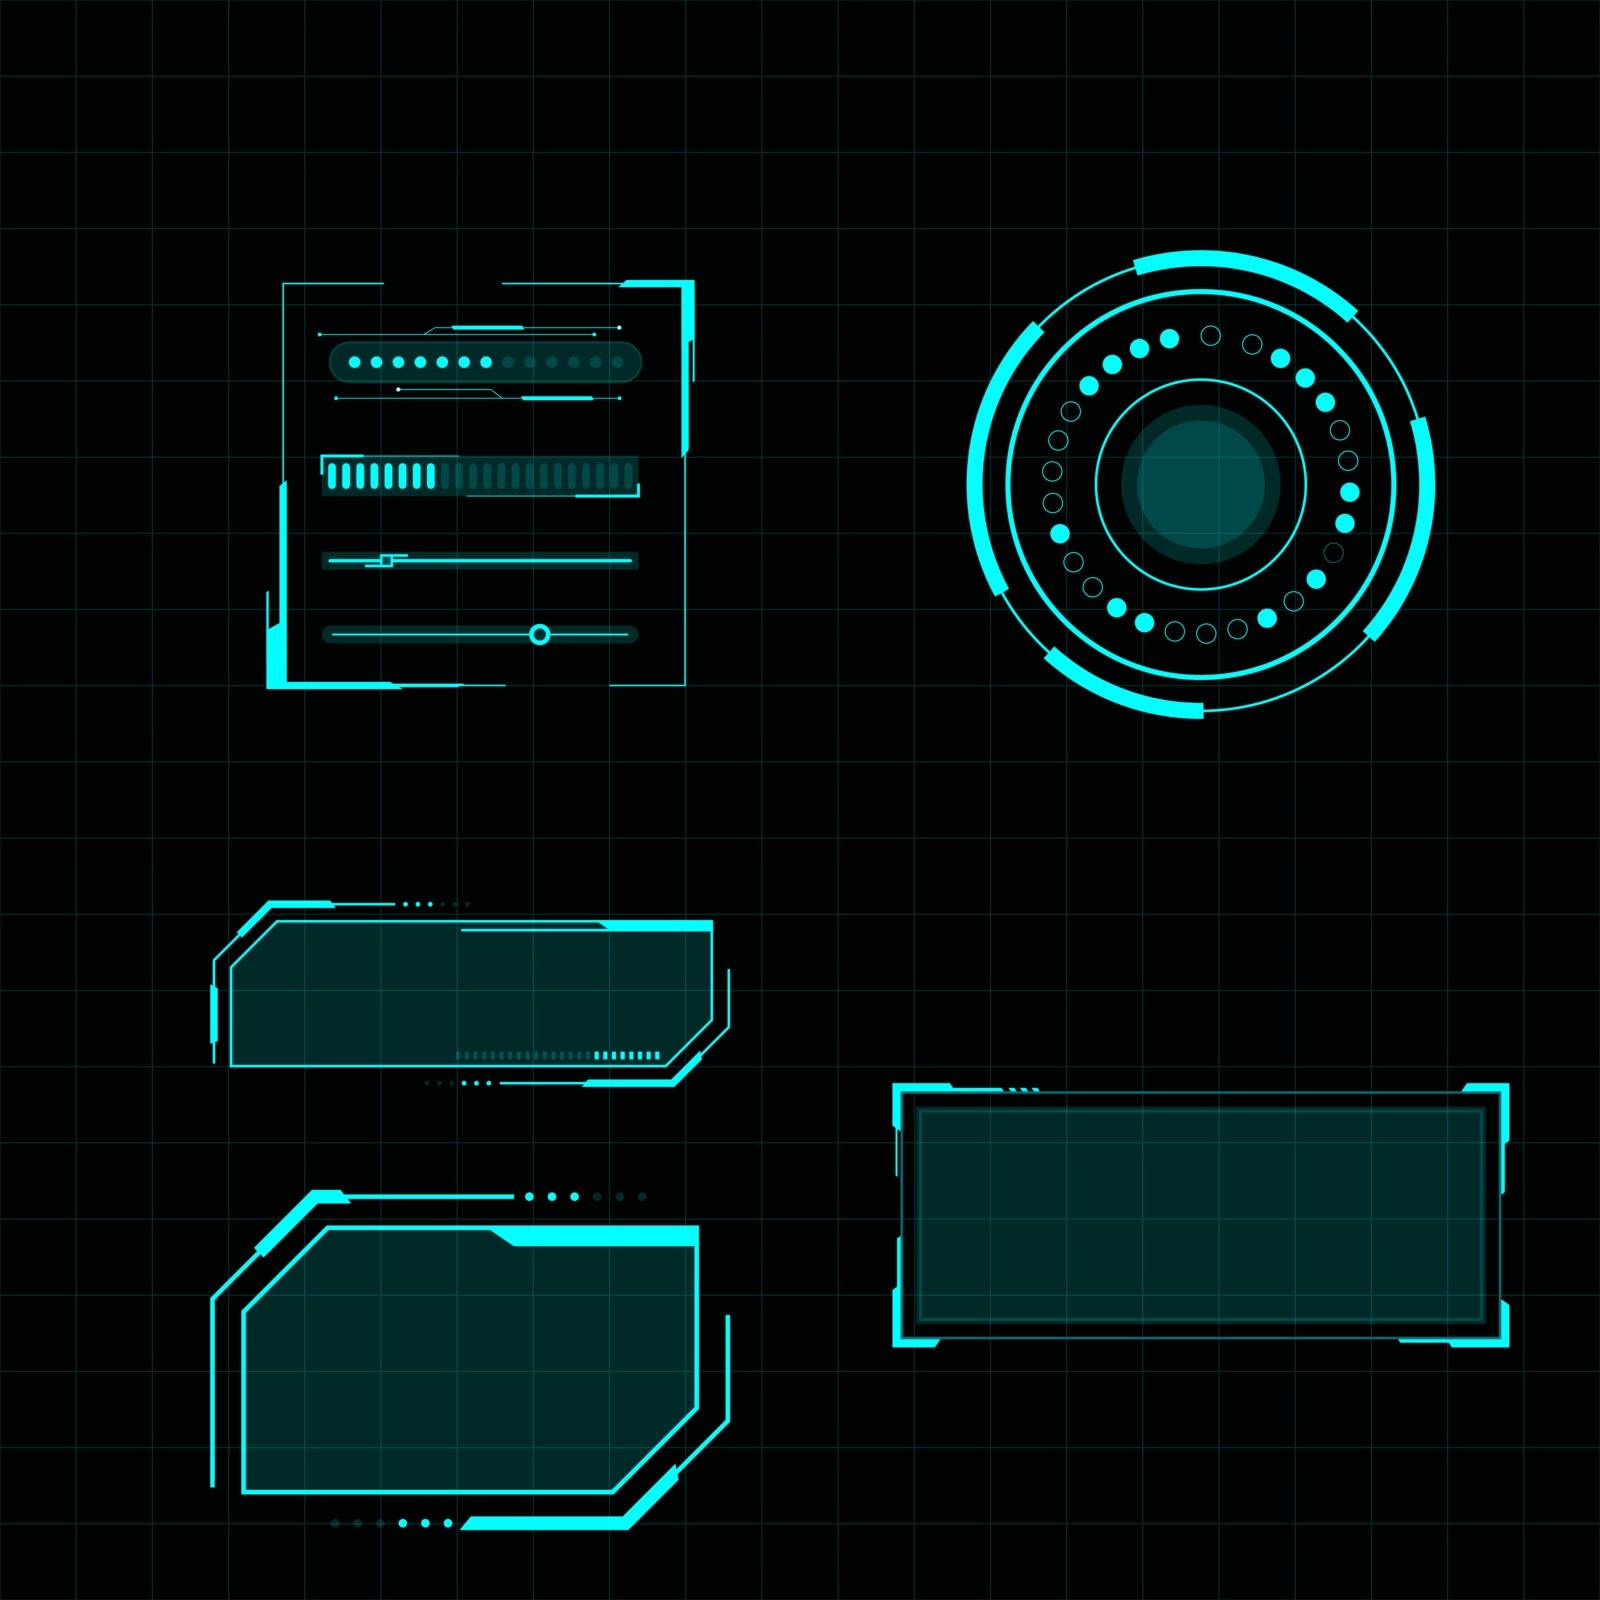 Futuristic user interface illustration design template